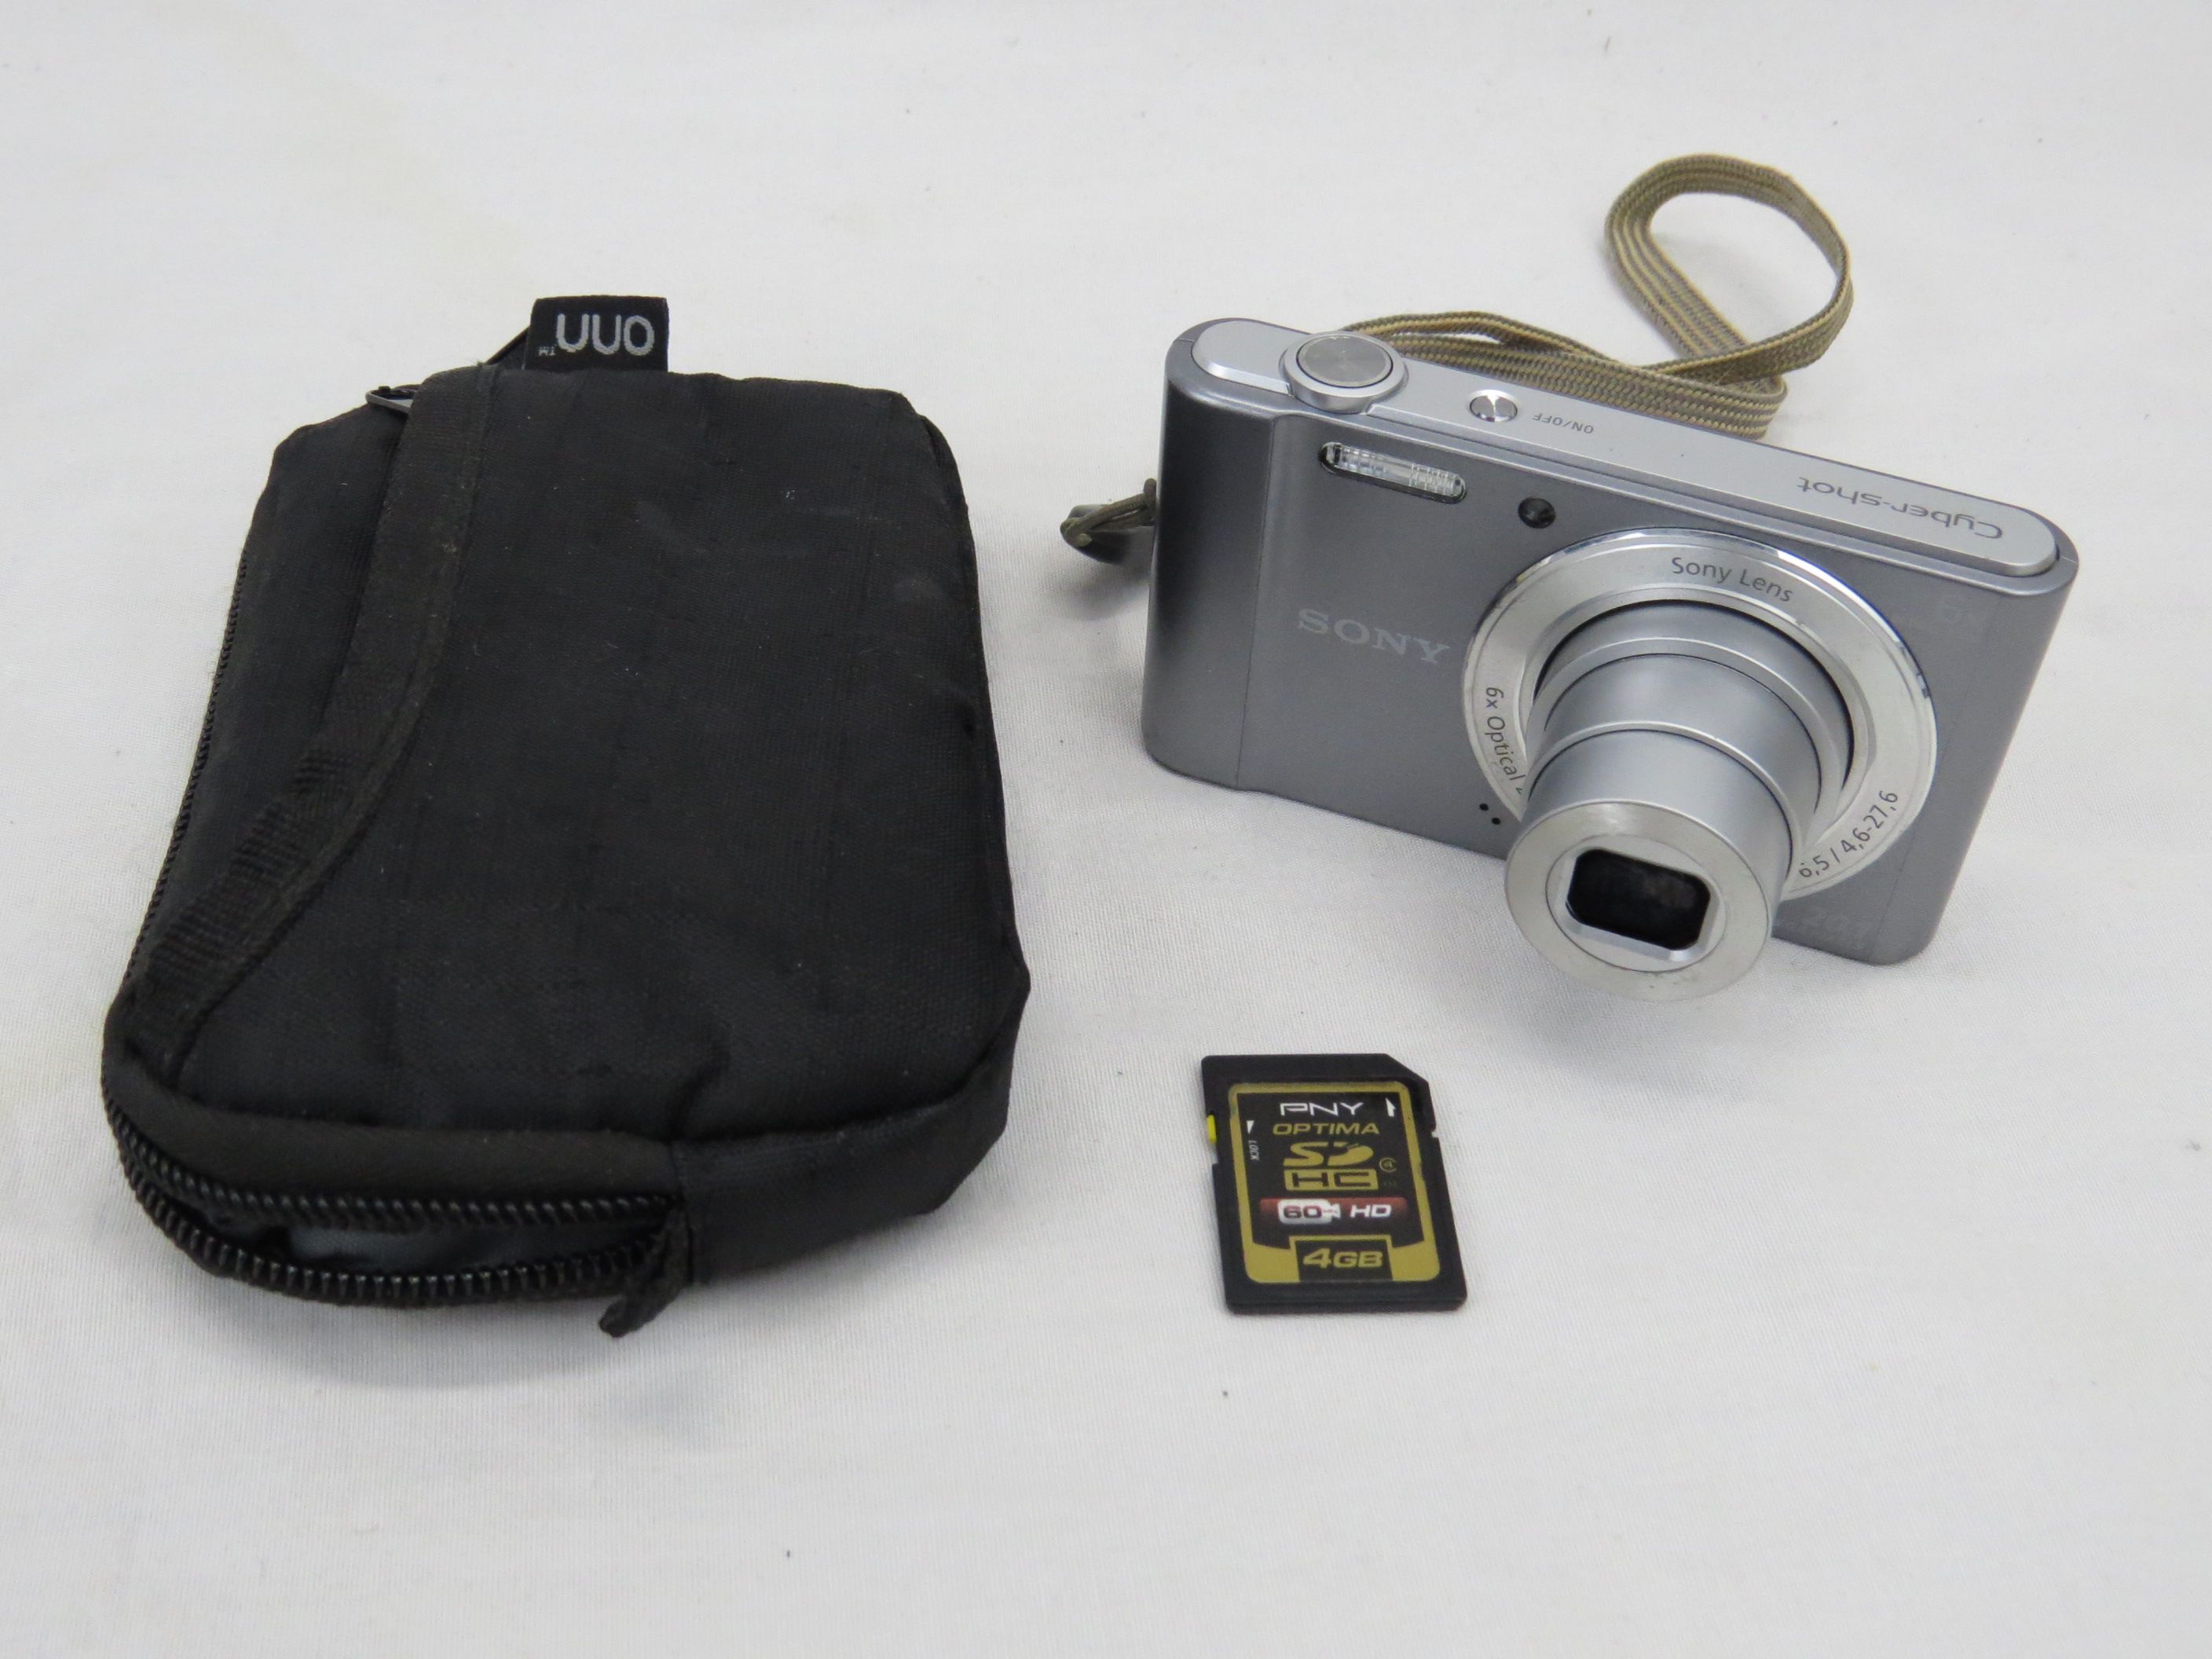 Sony CyberShot DSC-W810 Digital Camera 20.1 MP 6X Optical Zoom w/4 GB SD Card